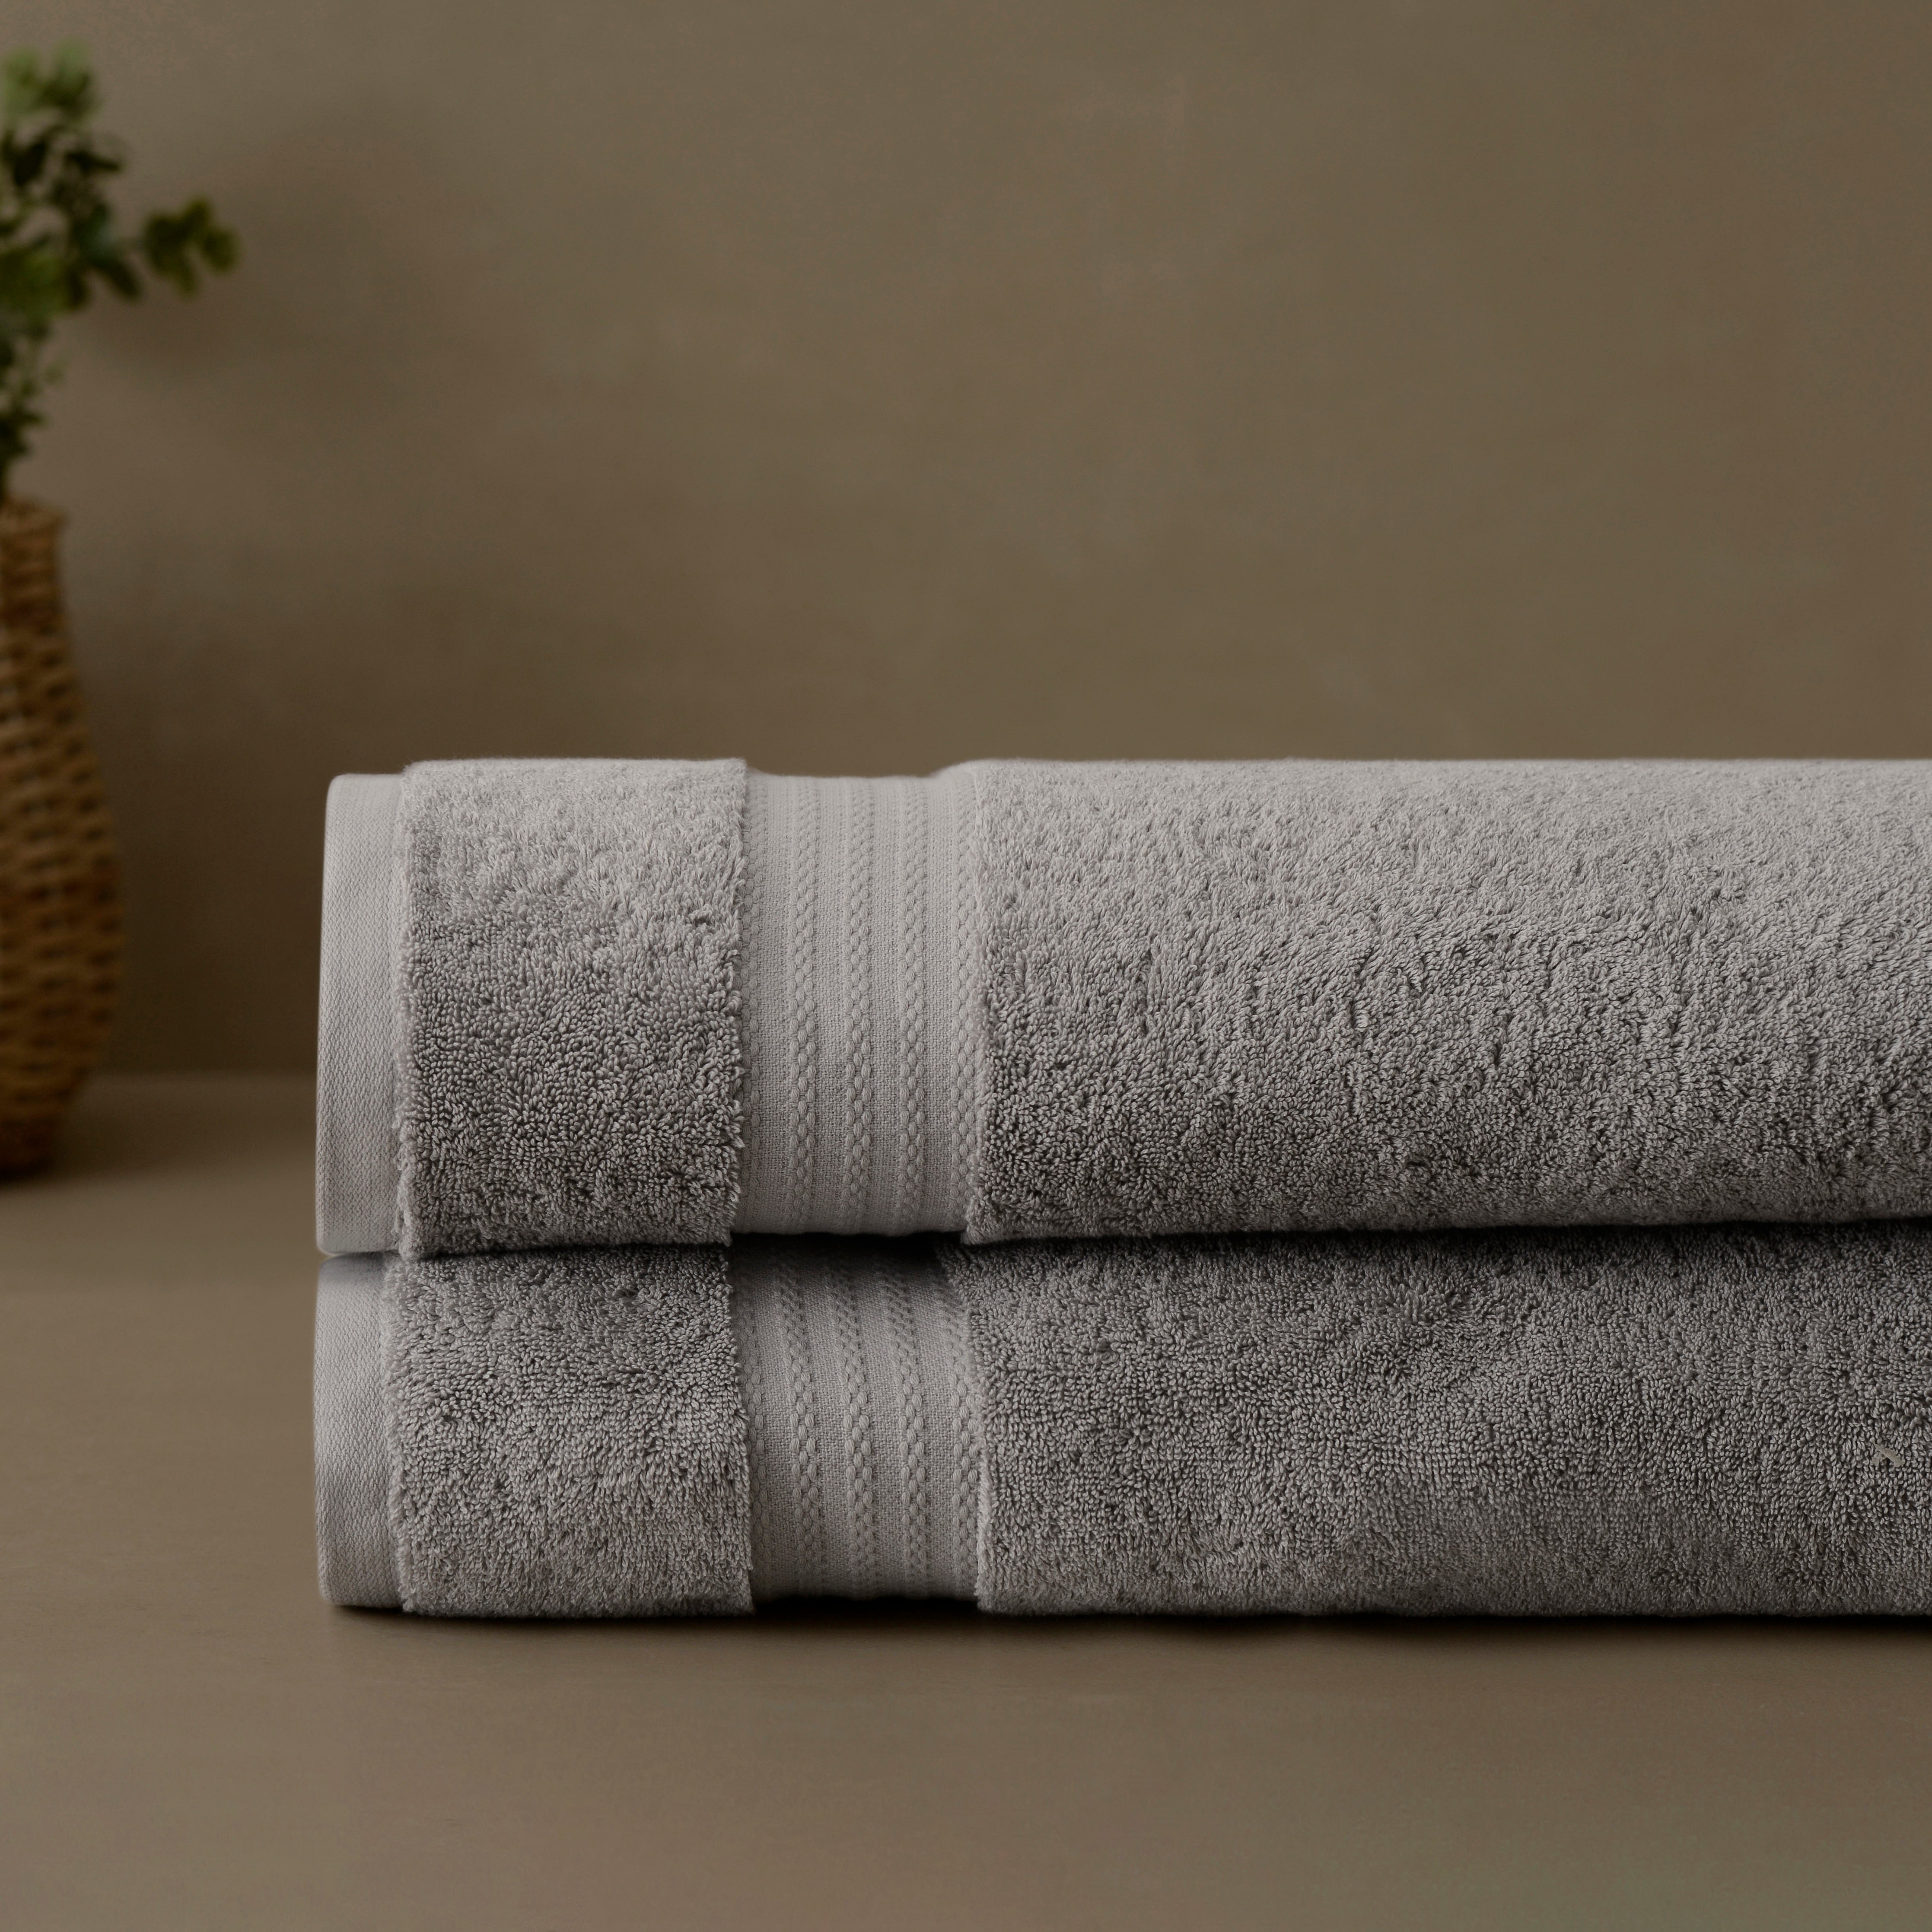 Super Soft Luxury Bath Towels - 4 Bath Towels Charcoal Gray - Solid 100% Cotton